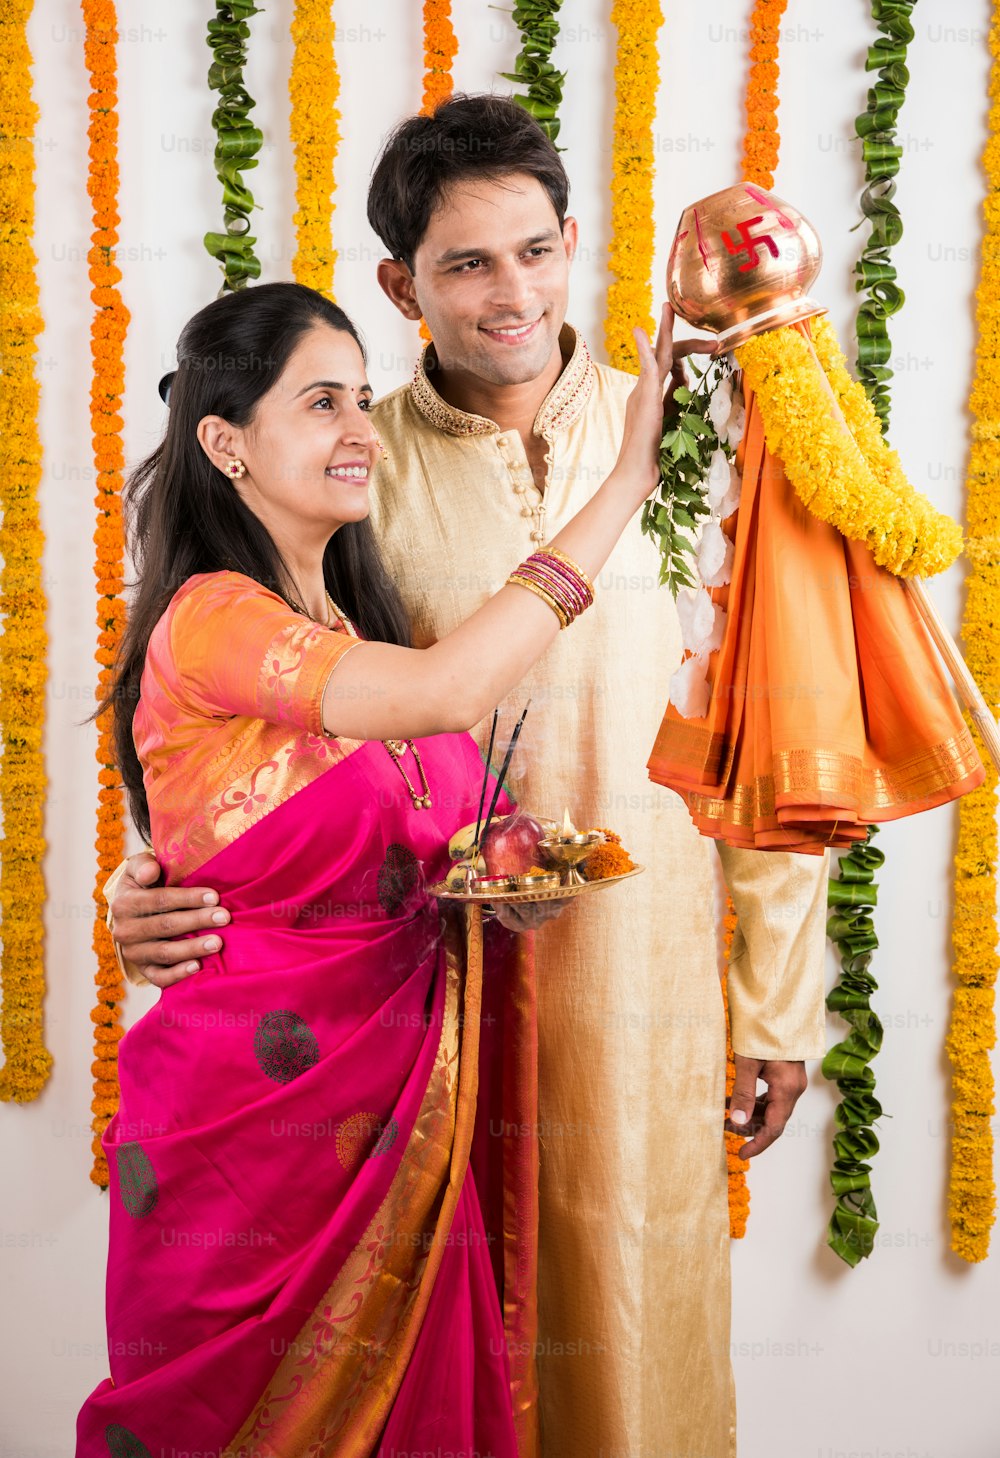 500+ Indian Bride Pictures  Download Free Images on Unsplash